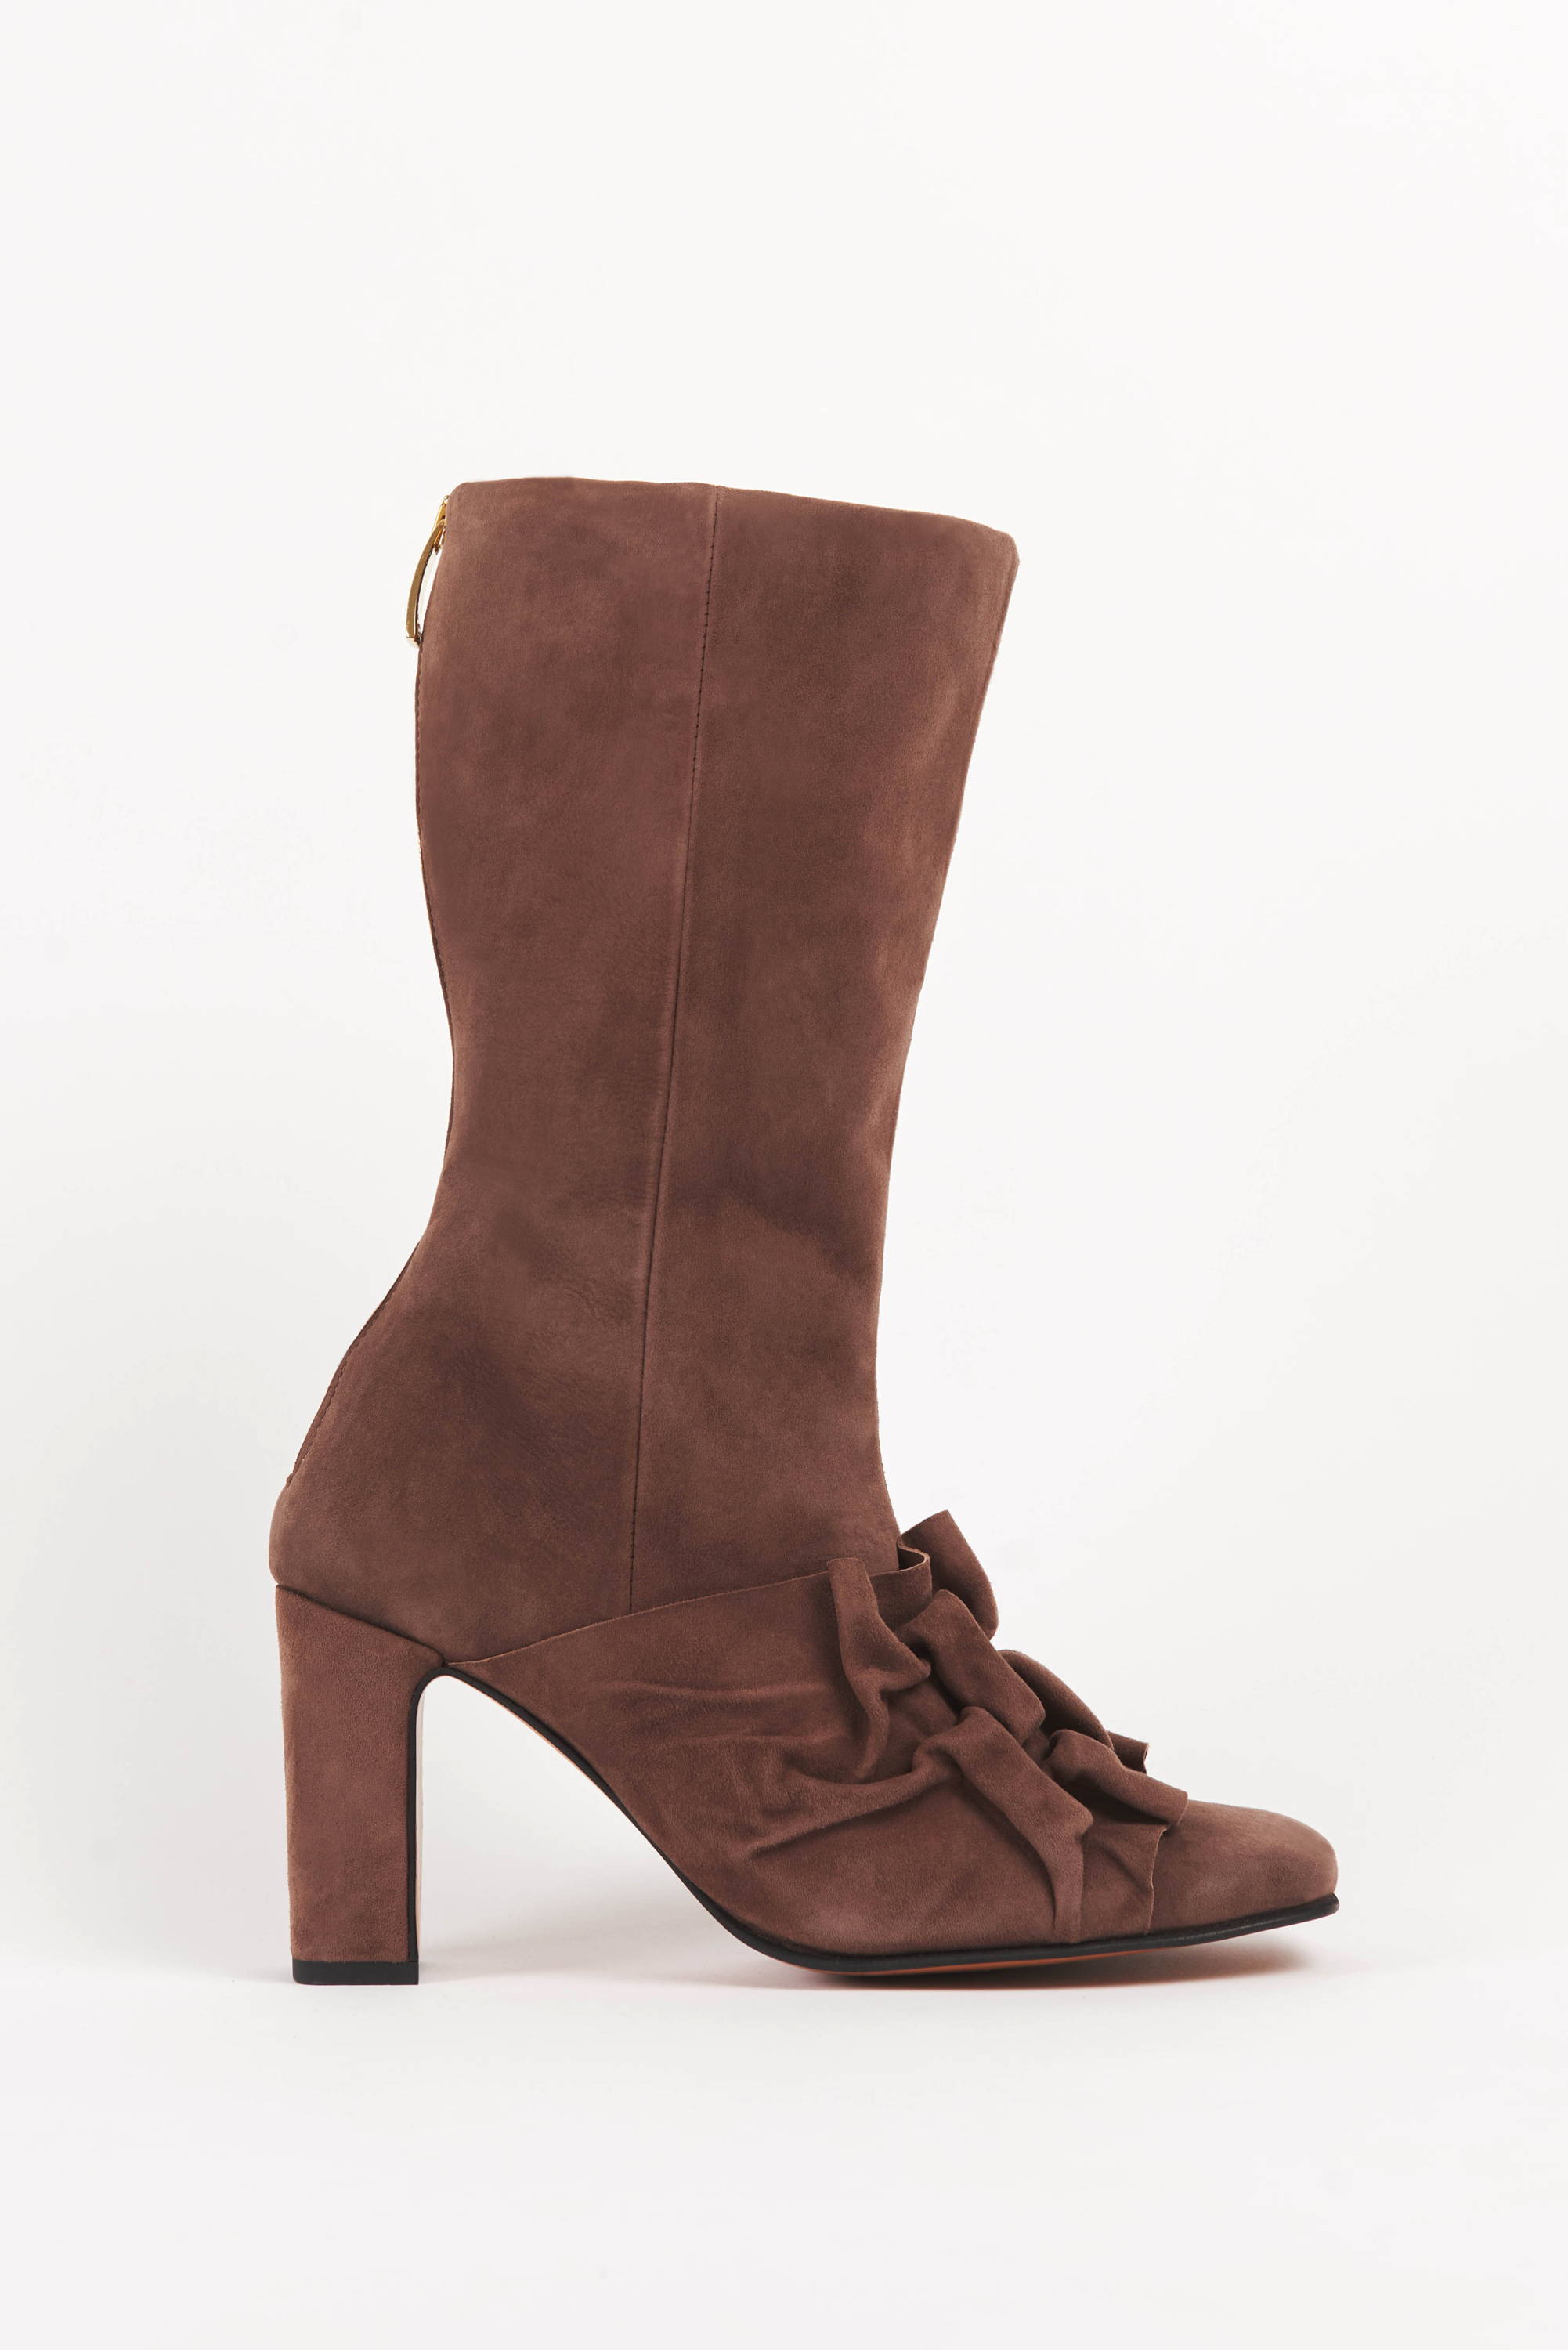 Vandrelaar Greta high-heel ankle boot in brown suede featuring canadian smocking detailing and a gold zip